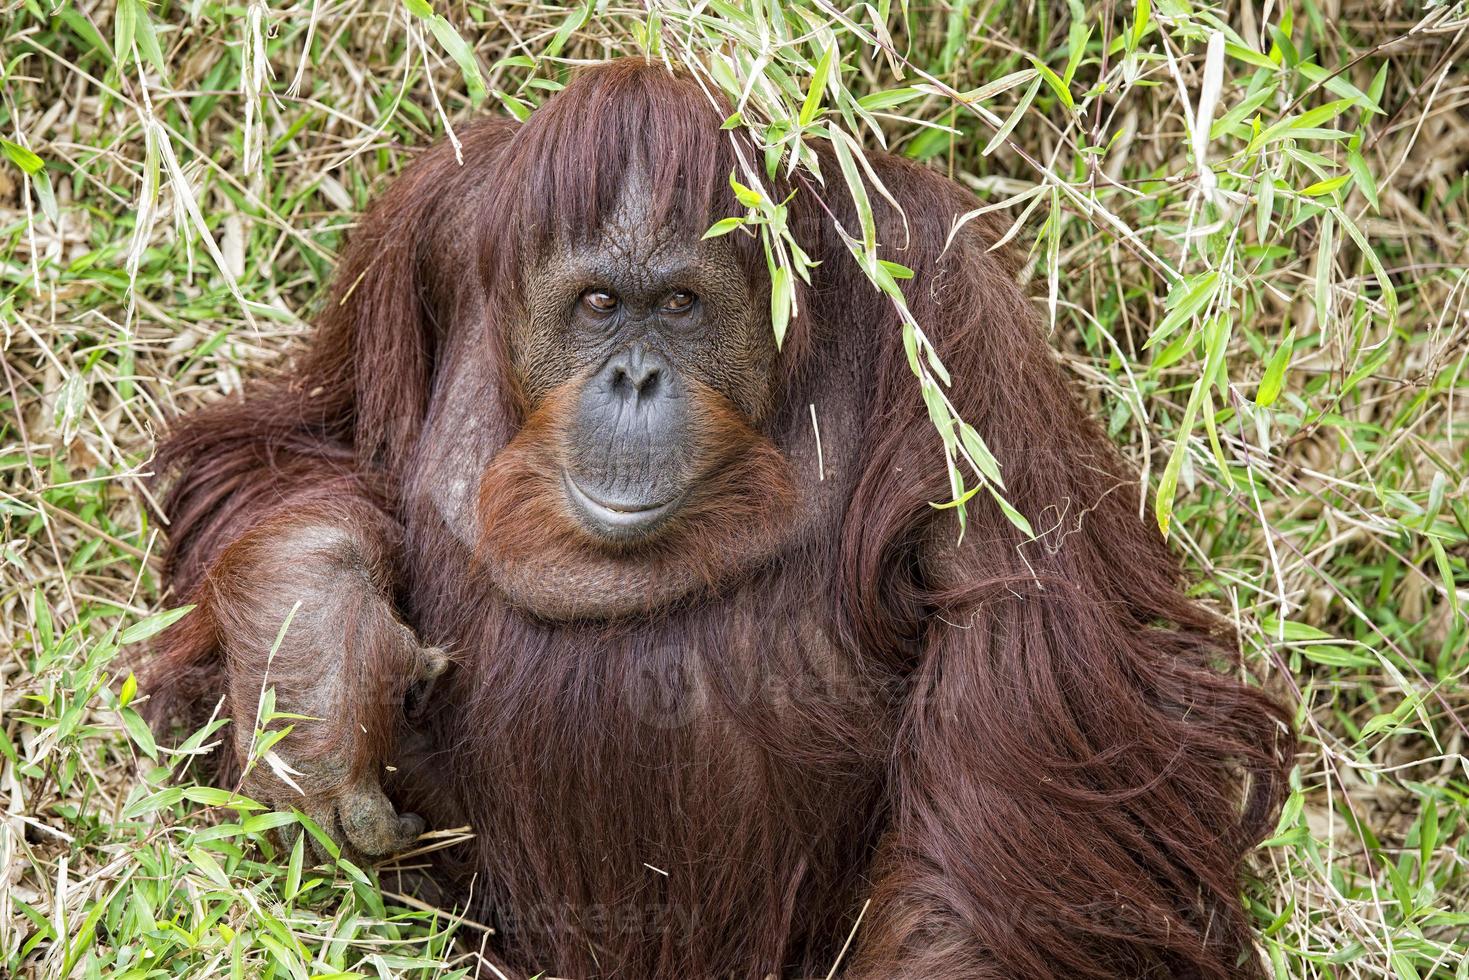 orangutan portrait on the grass background photo